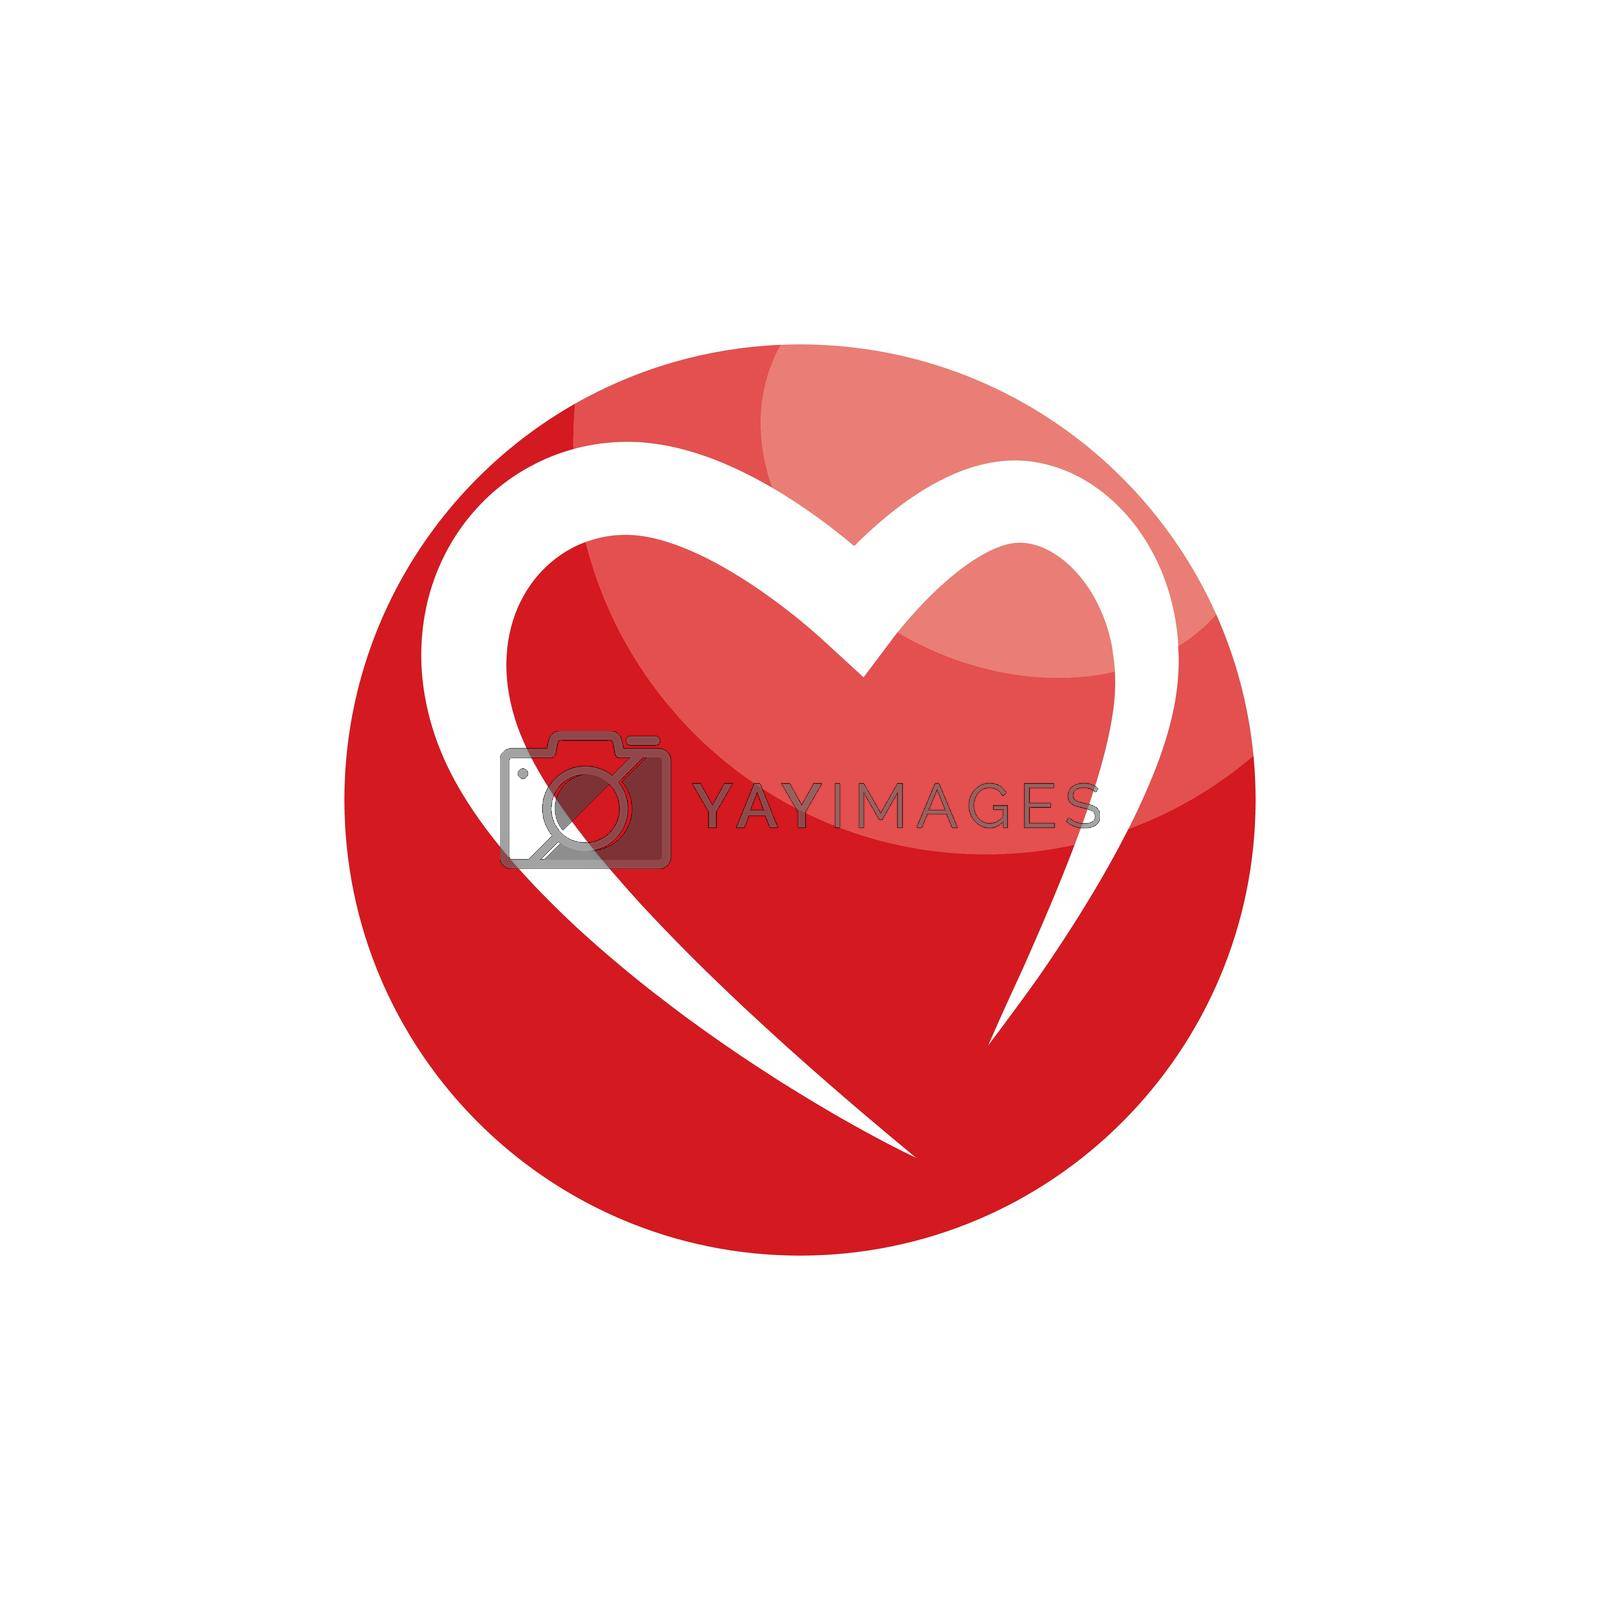 Love and hand logo vector illustration design